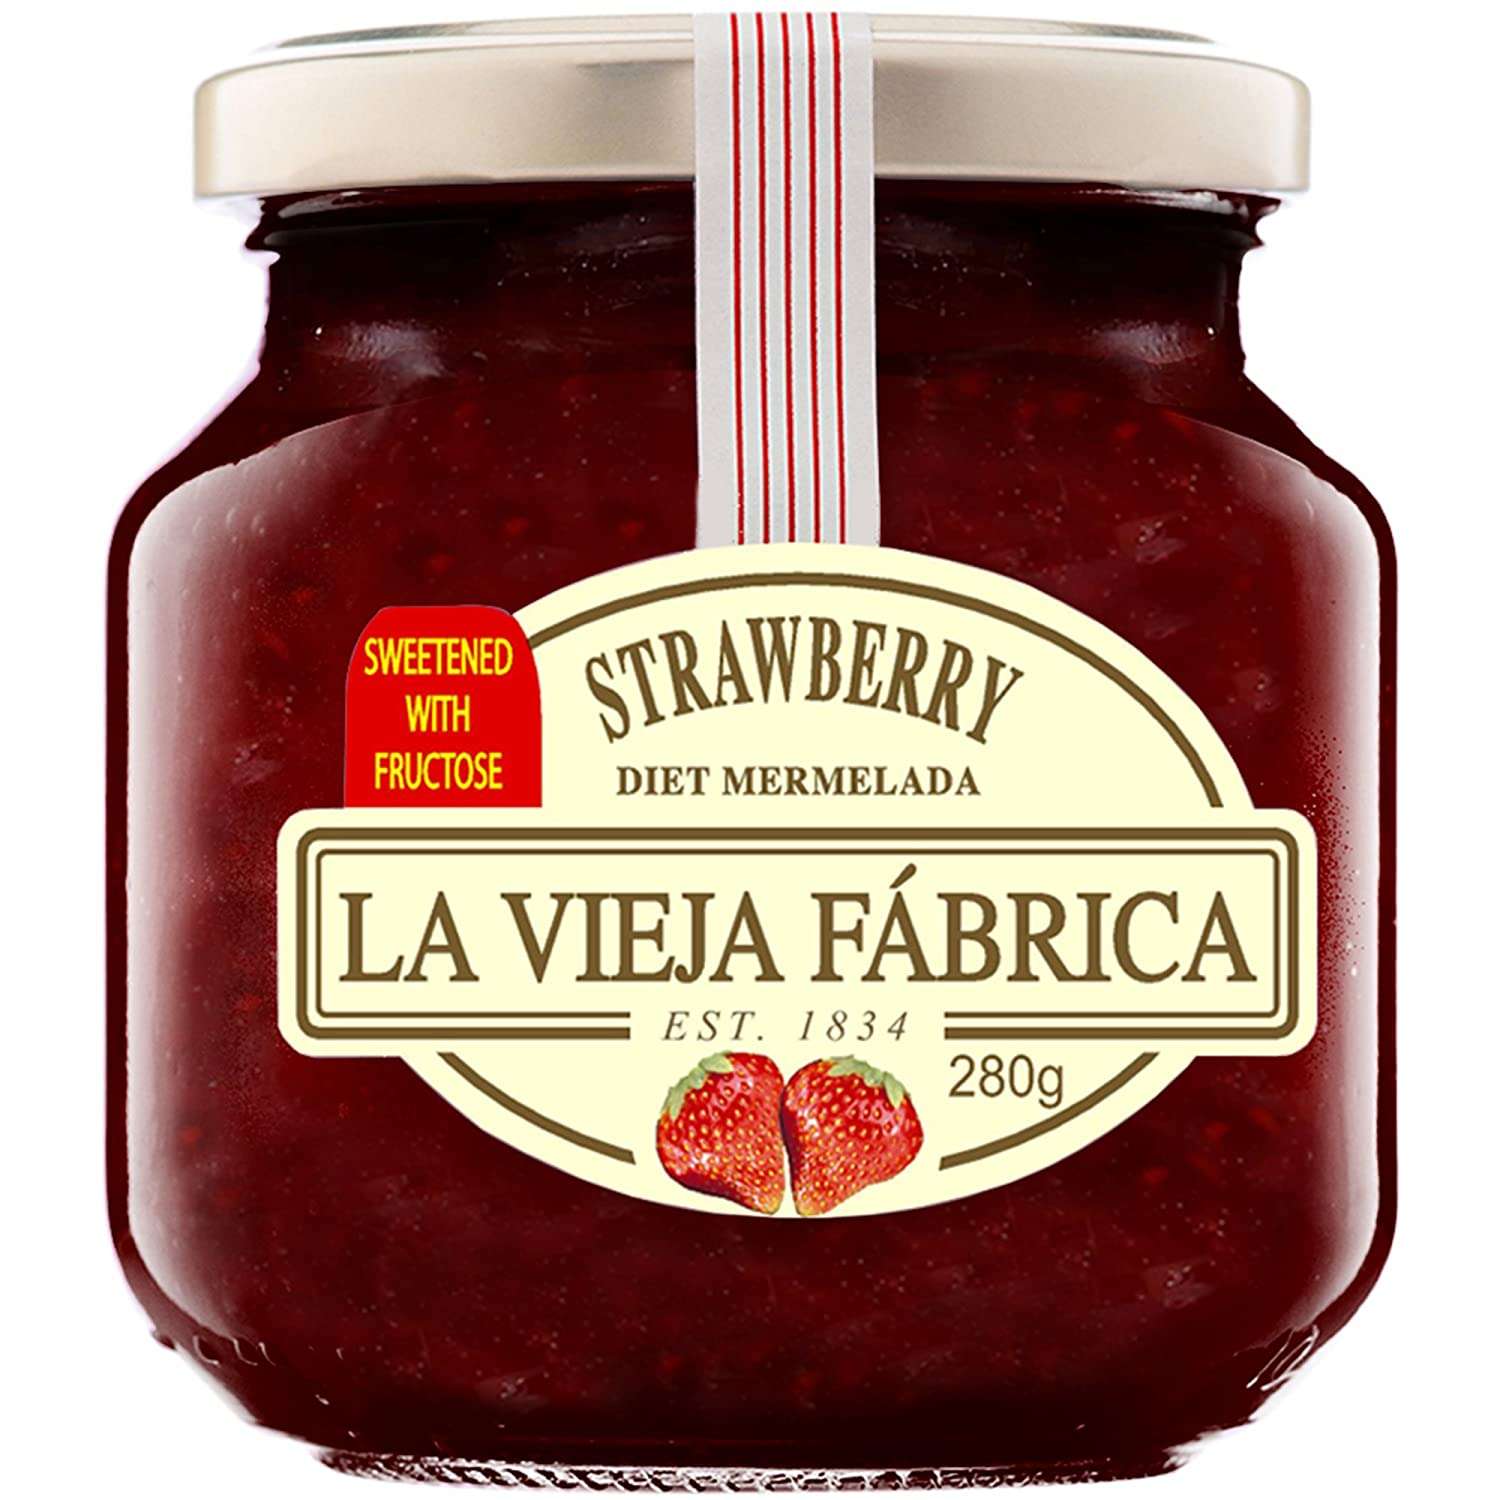 LA VIEJA FABRICA Fat Free Strawberry Diet Marmalade (Jam ...